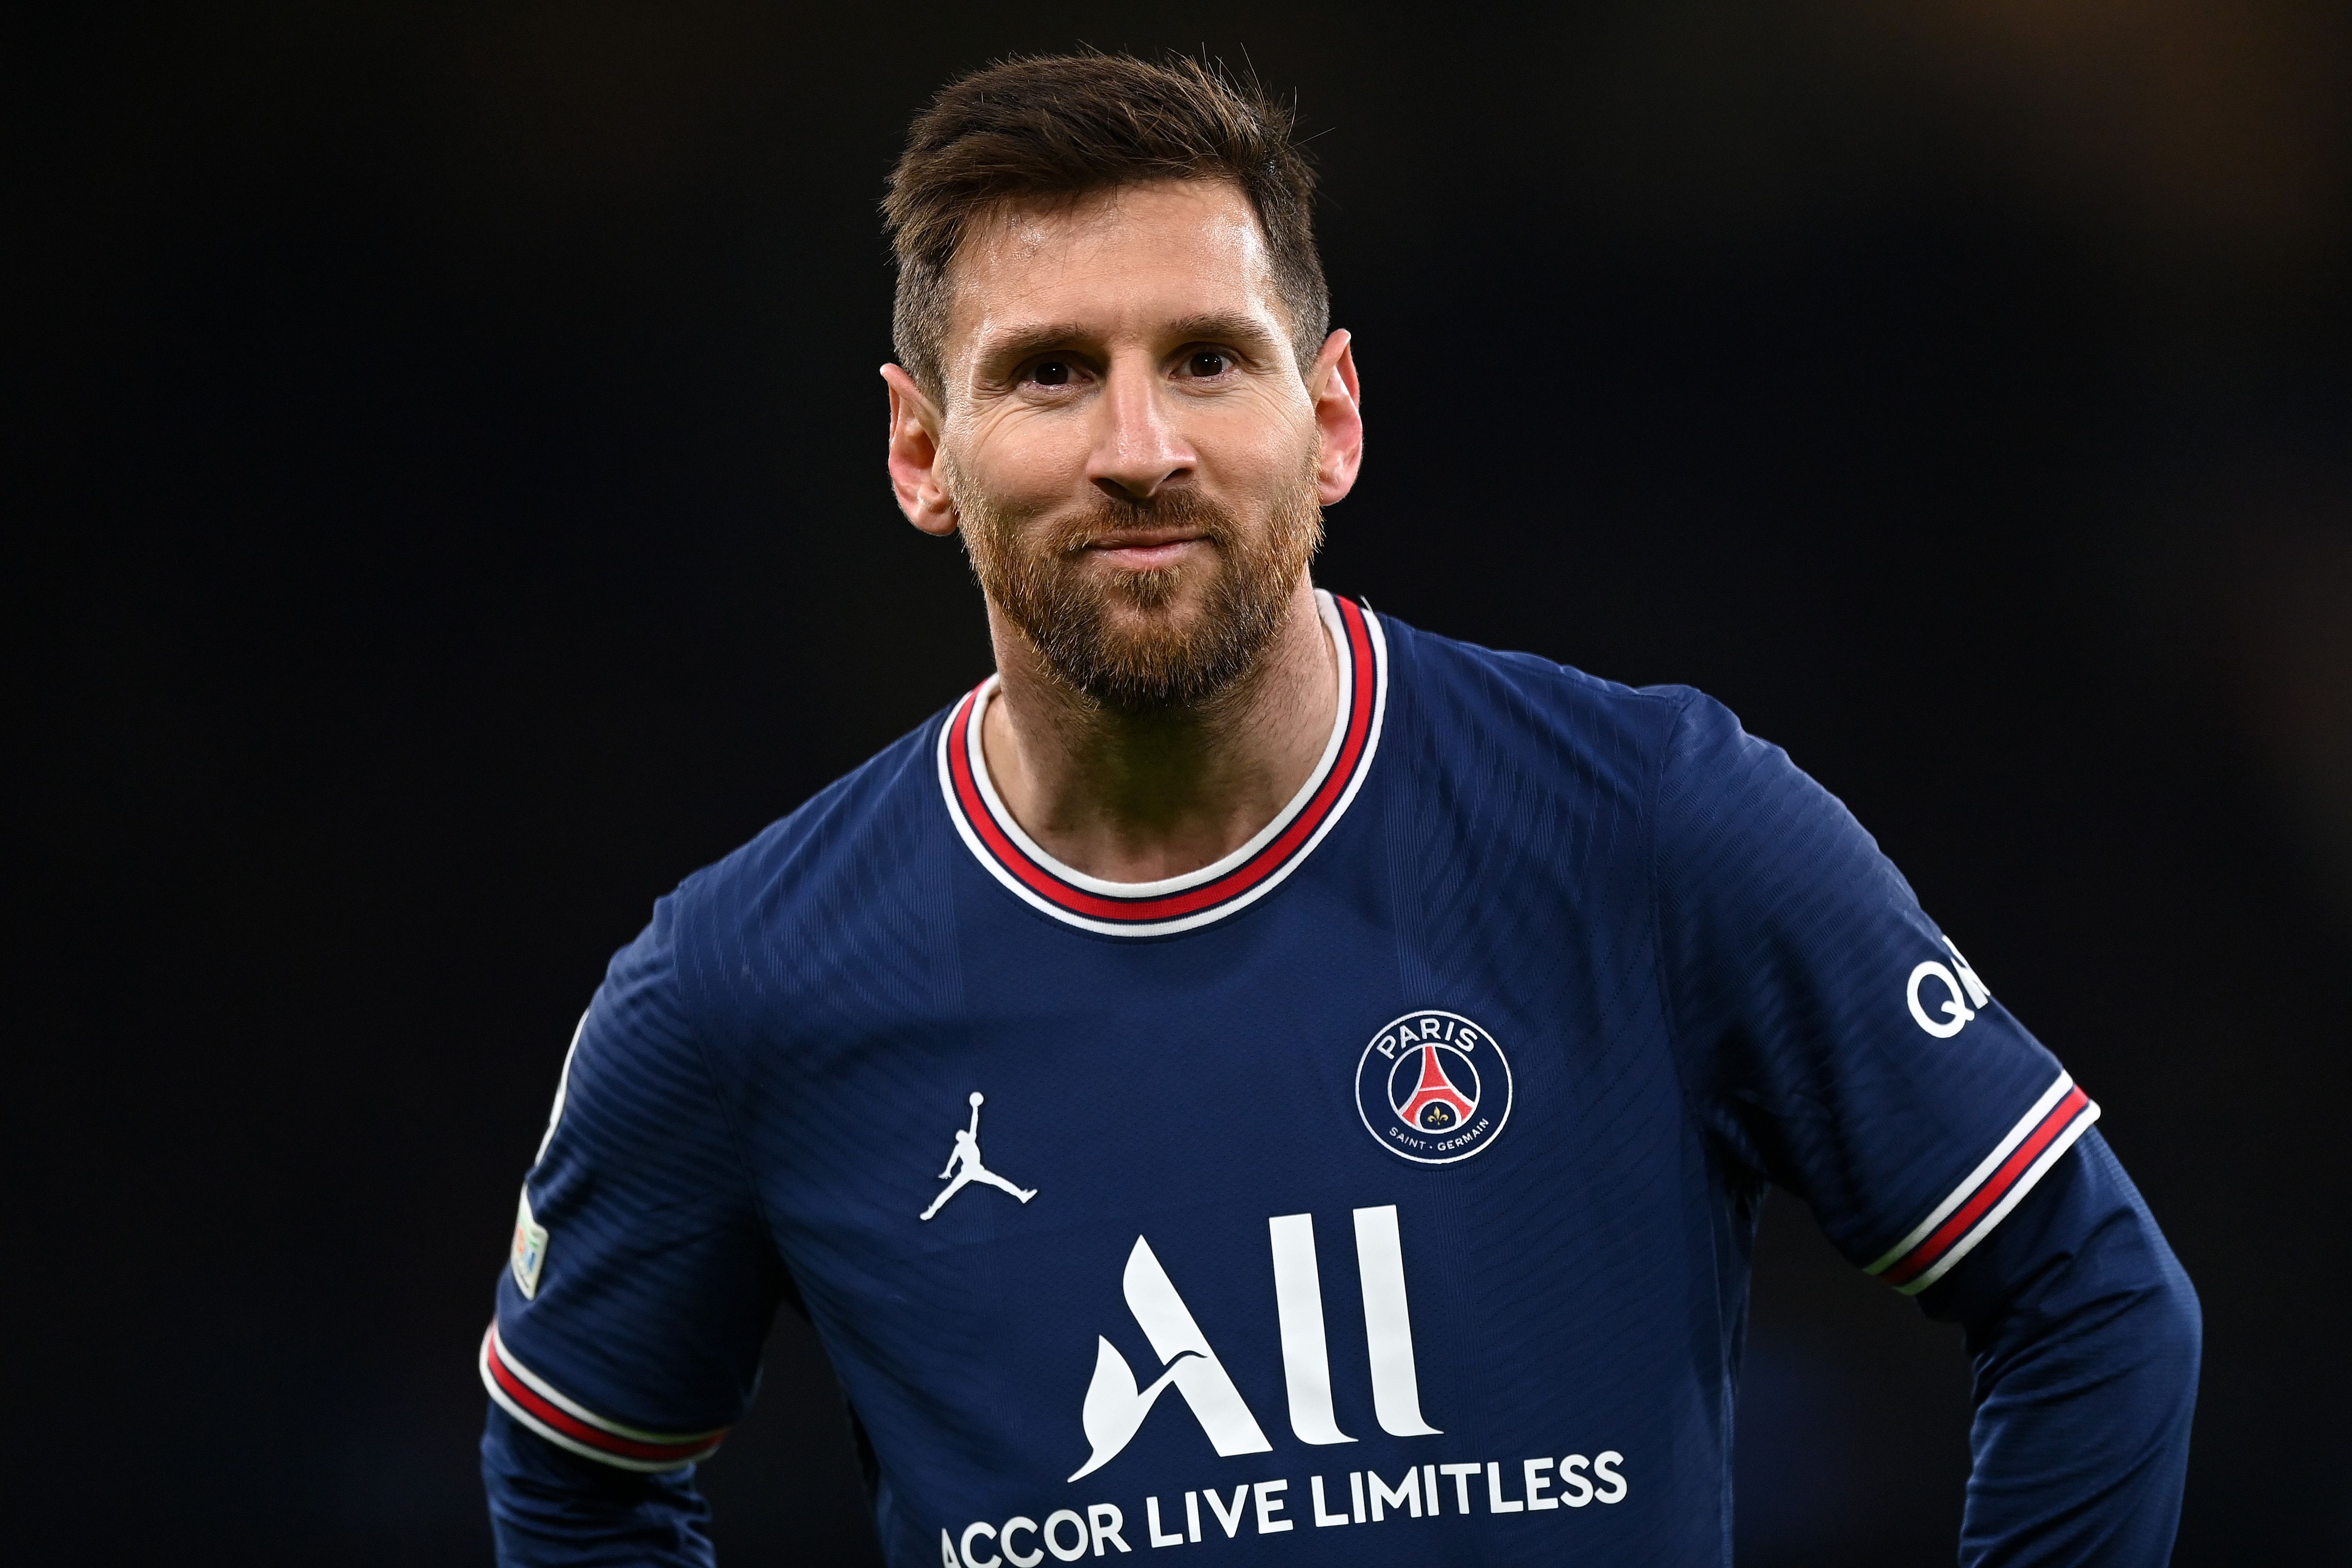 Lionel Messi in action with Paris Saint-Germain